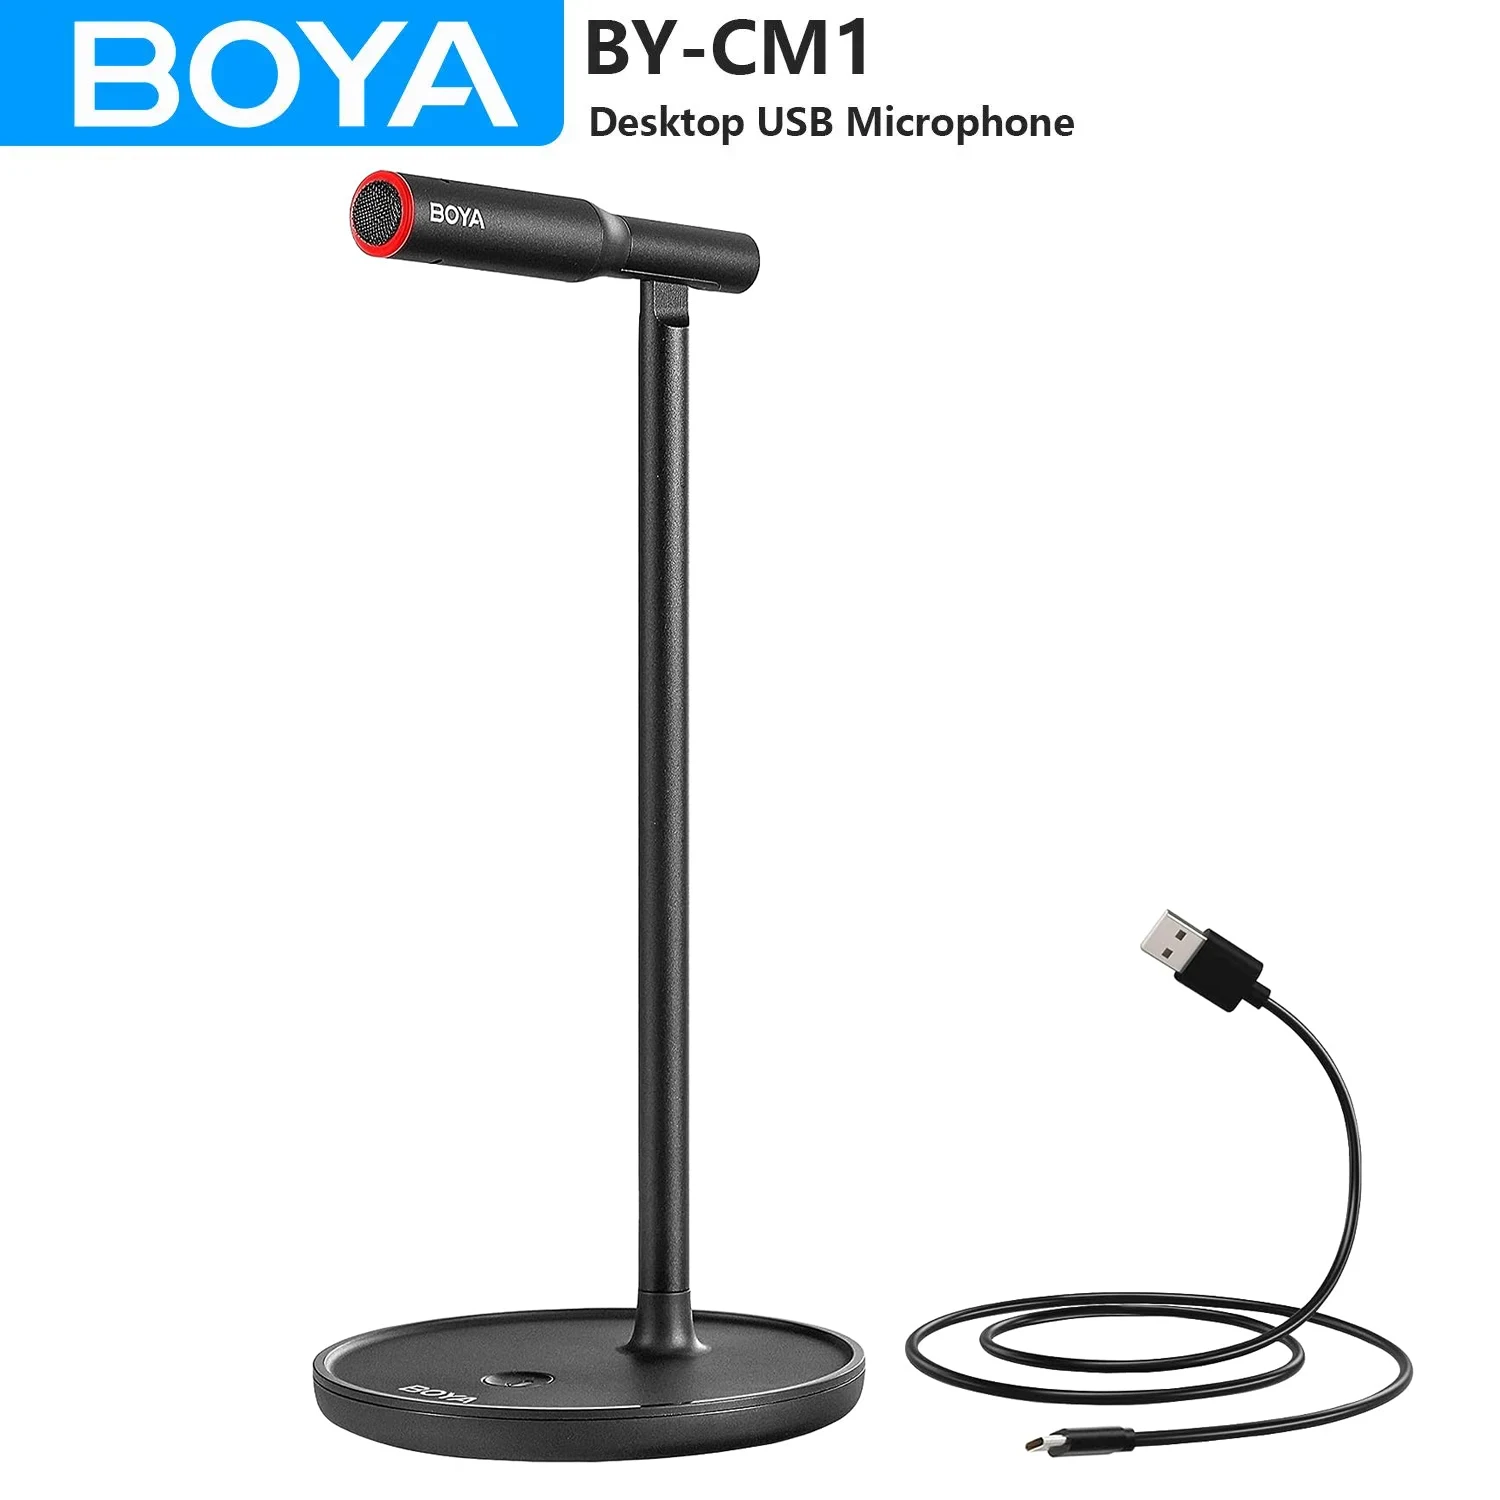 

BOYA BY-CM1 Condenser Desktop USB Microphone for PC Window Mac Laptop YouTube Recording Podcast Studio Blogger Streaming Meeting